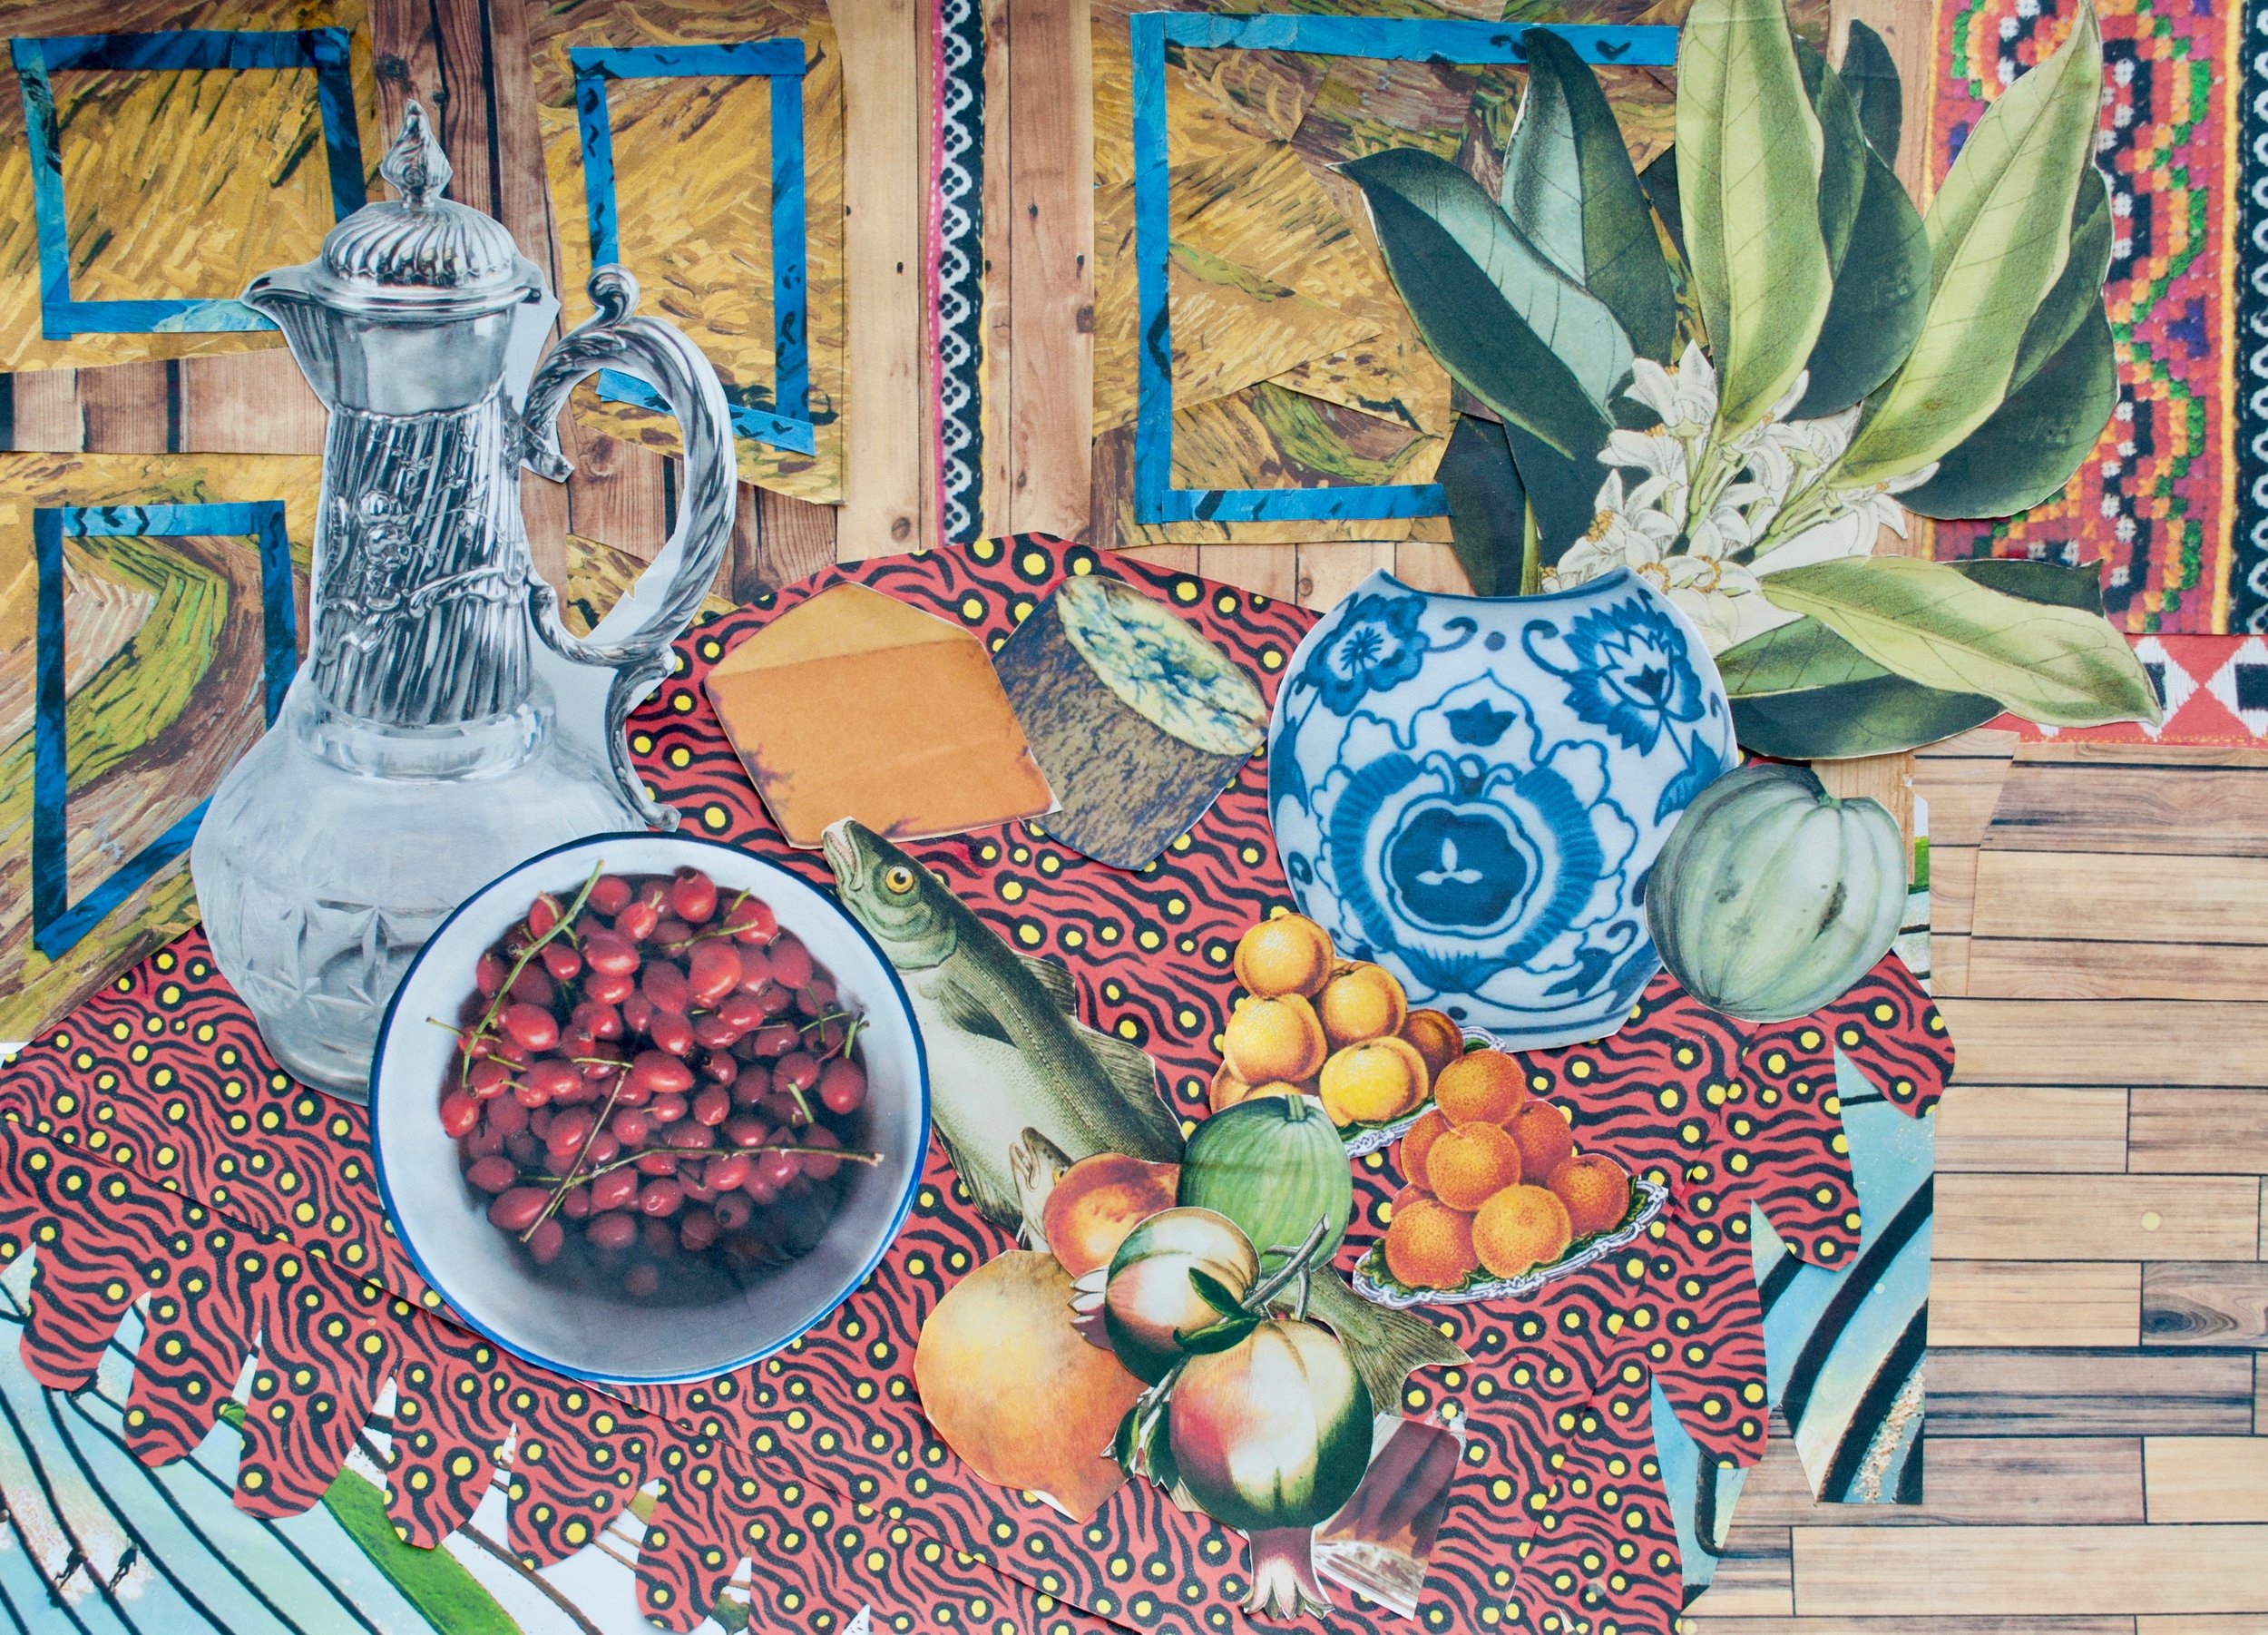 Trung - Still Life after Henri Matisse's Still Life (Pineapples, Lemons).jpg